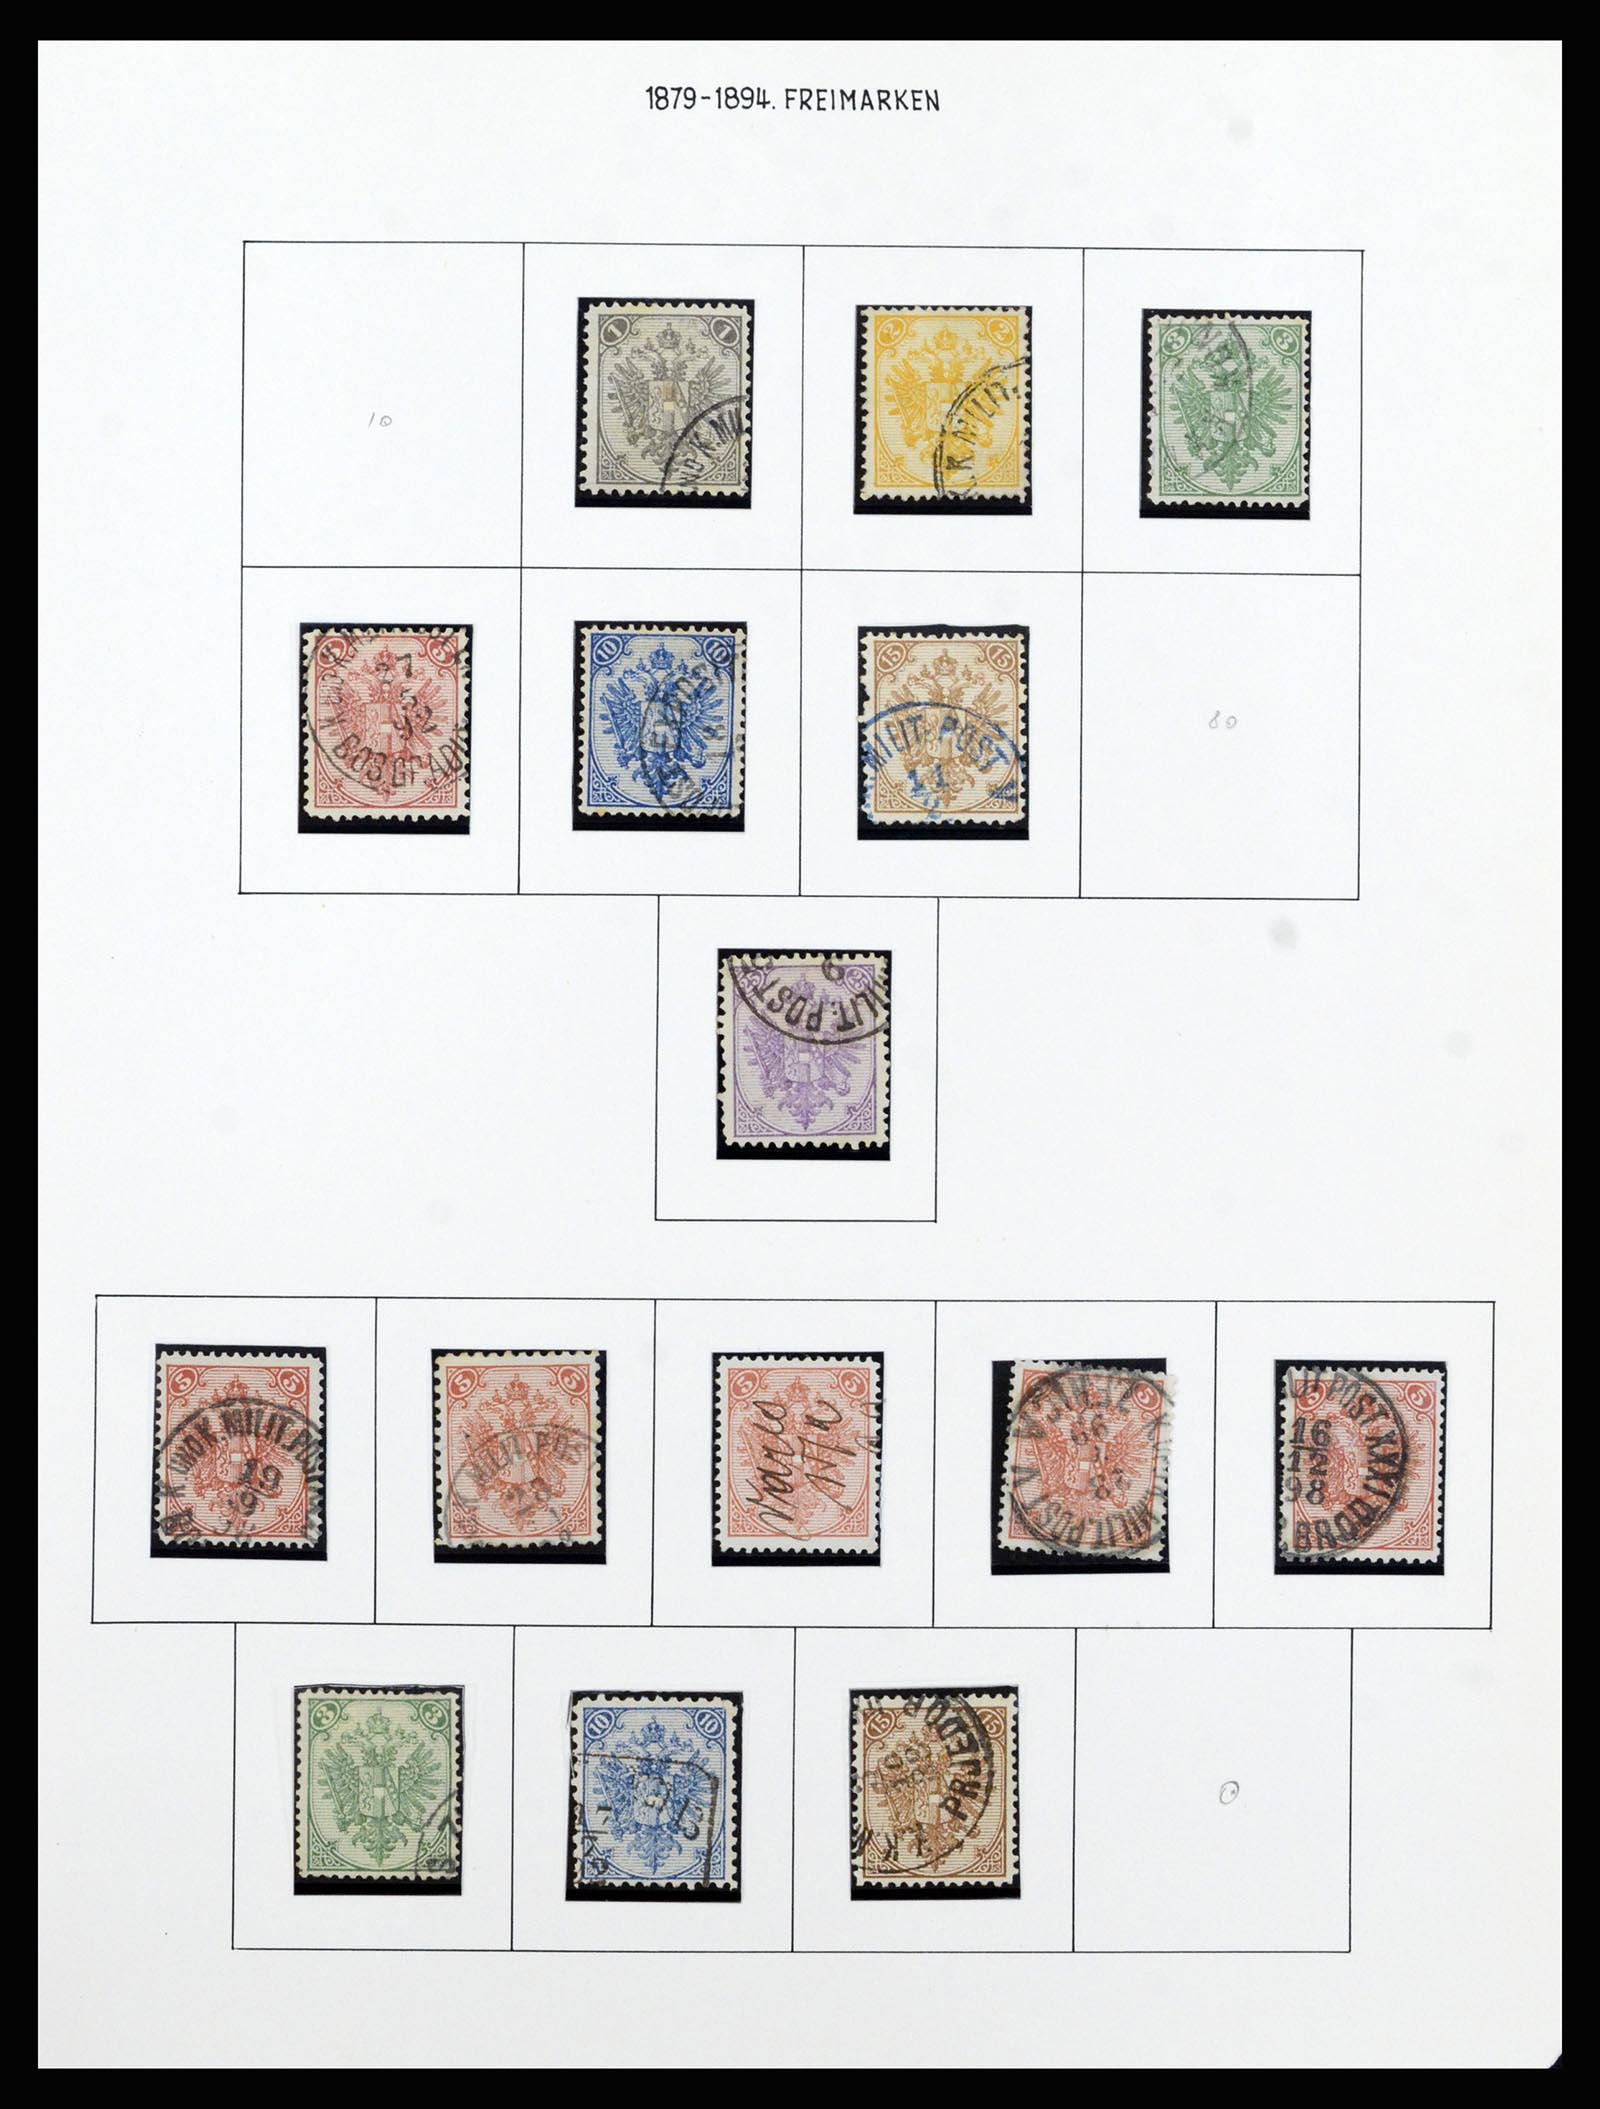 37141 001 - Stamp collection 37141 Bosnia Herzegovina 1879-1918.